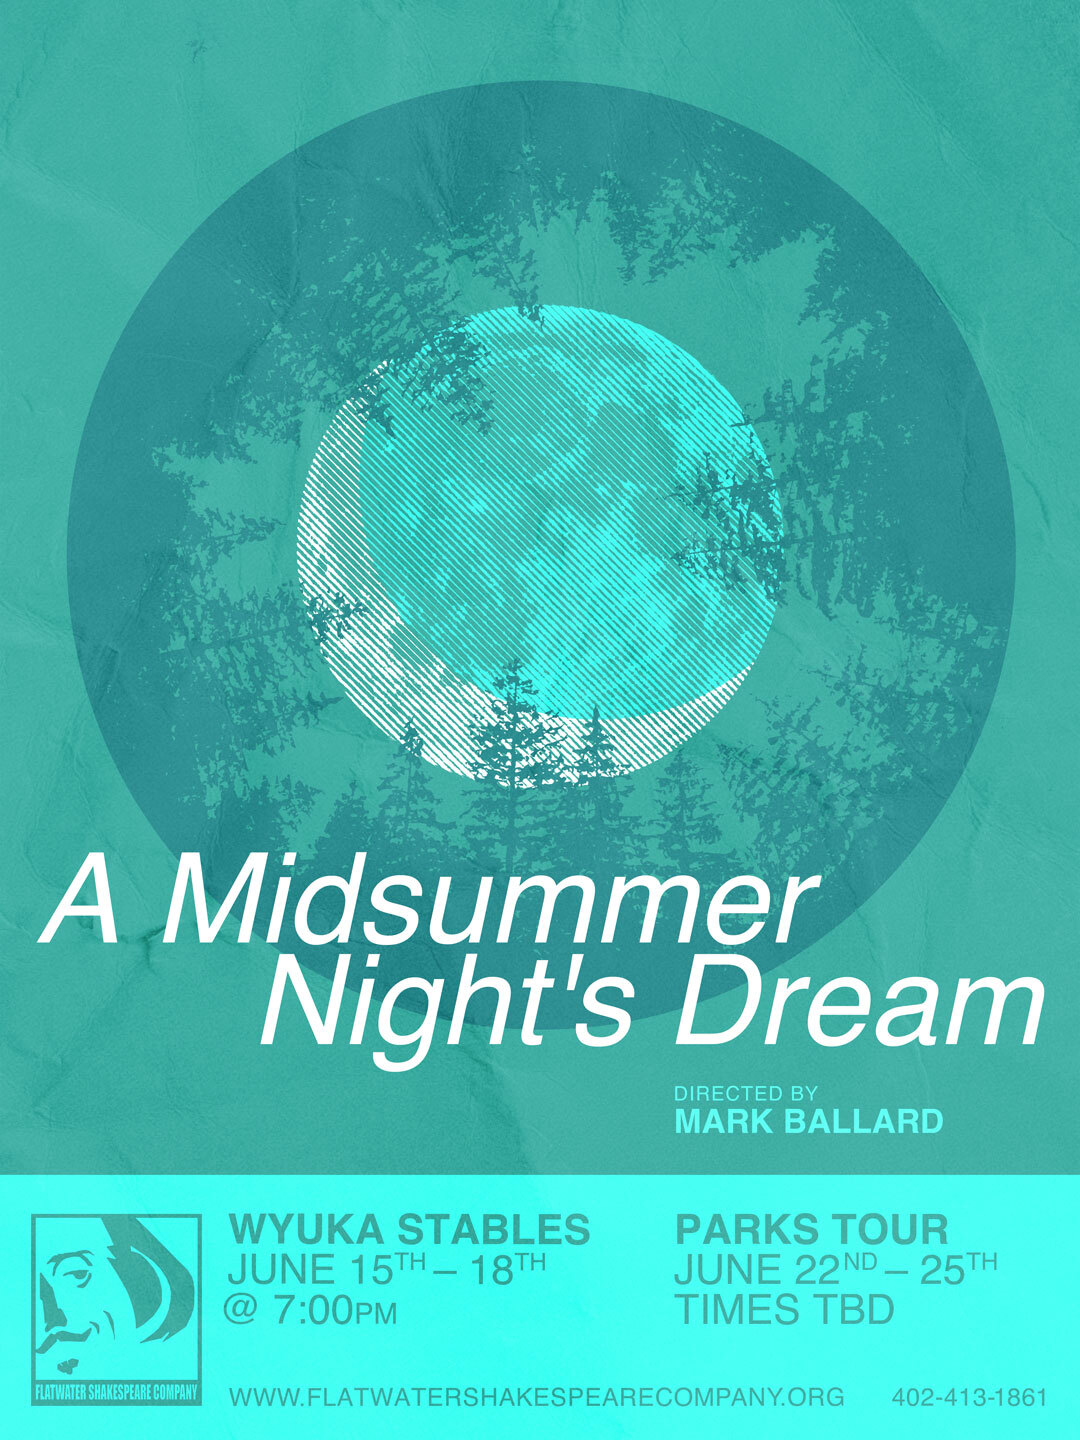 6/17 SEN - SENIOR (65+): Sat. June 17, 2023 | 7:00 p.m. - 9:00 p.m. CST | Wyuka Stables (A Midsummer Night's Dream)